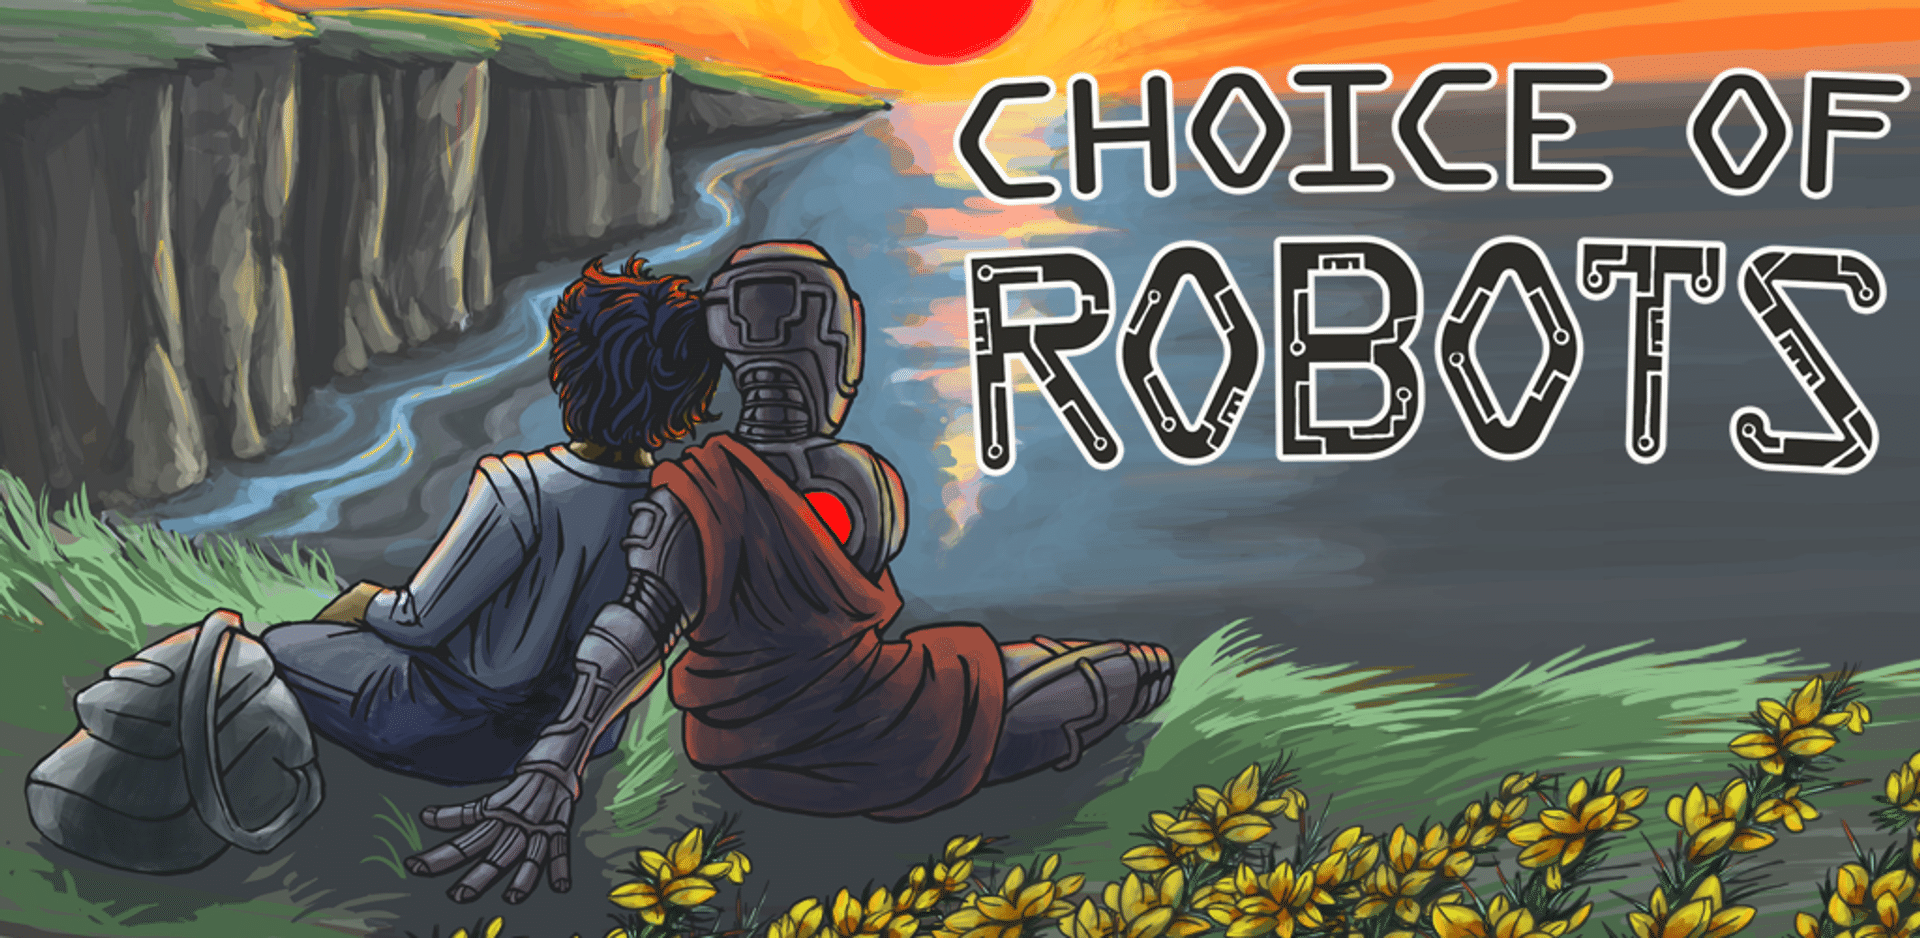 Choice of life игра. Игра the choice of Life. Choice of Robots игра. Игра your choice interactive. Life choices game.